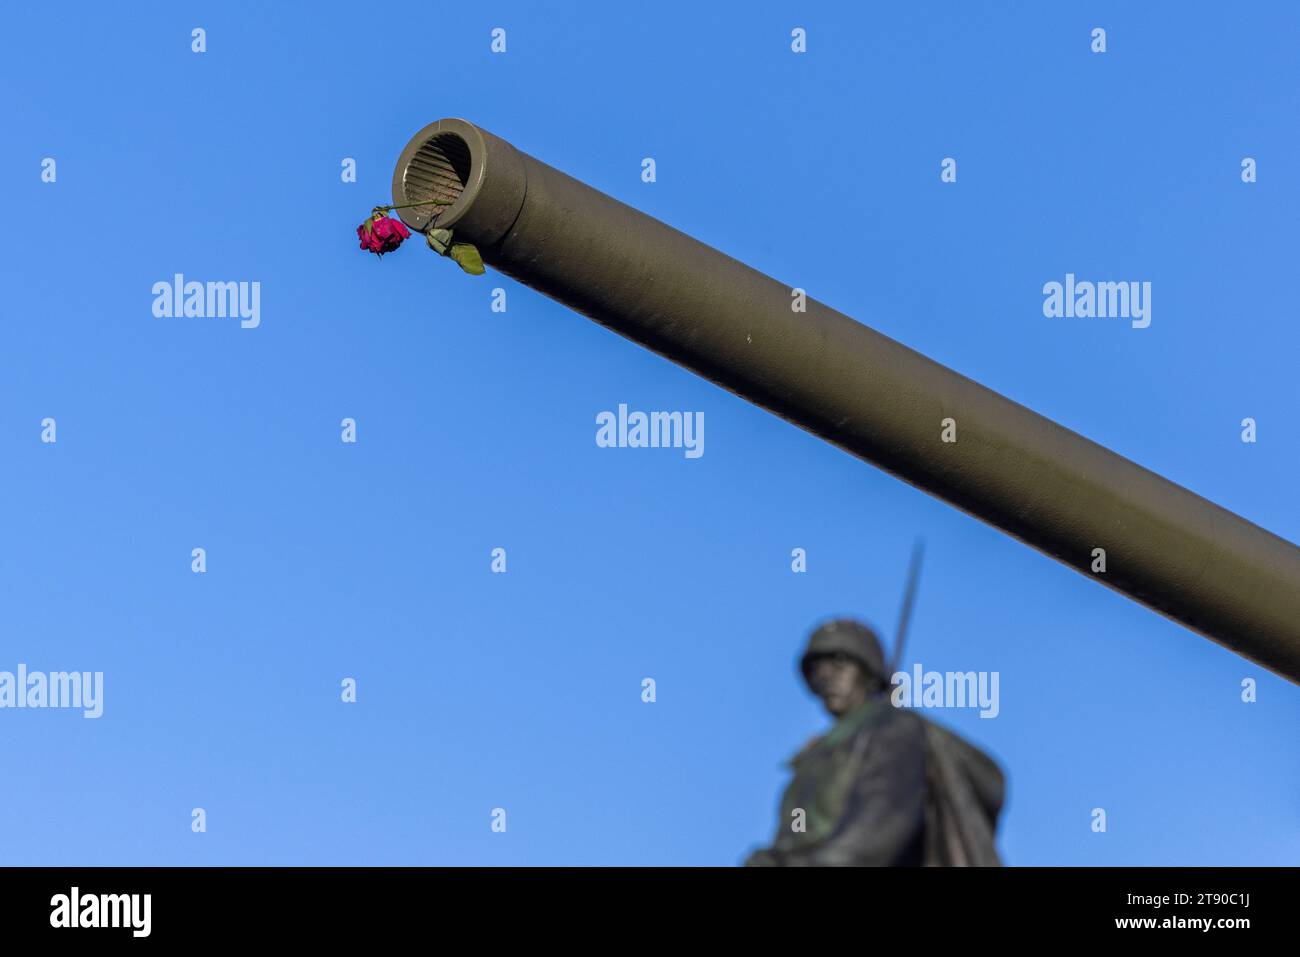 Rose Placed in Barrel of Tank Cannon at the Soviet War Memorial, Tiergarten, Berlin, Germany Stock Photo